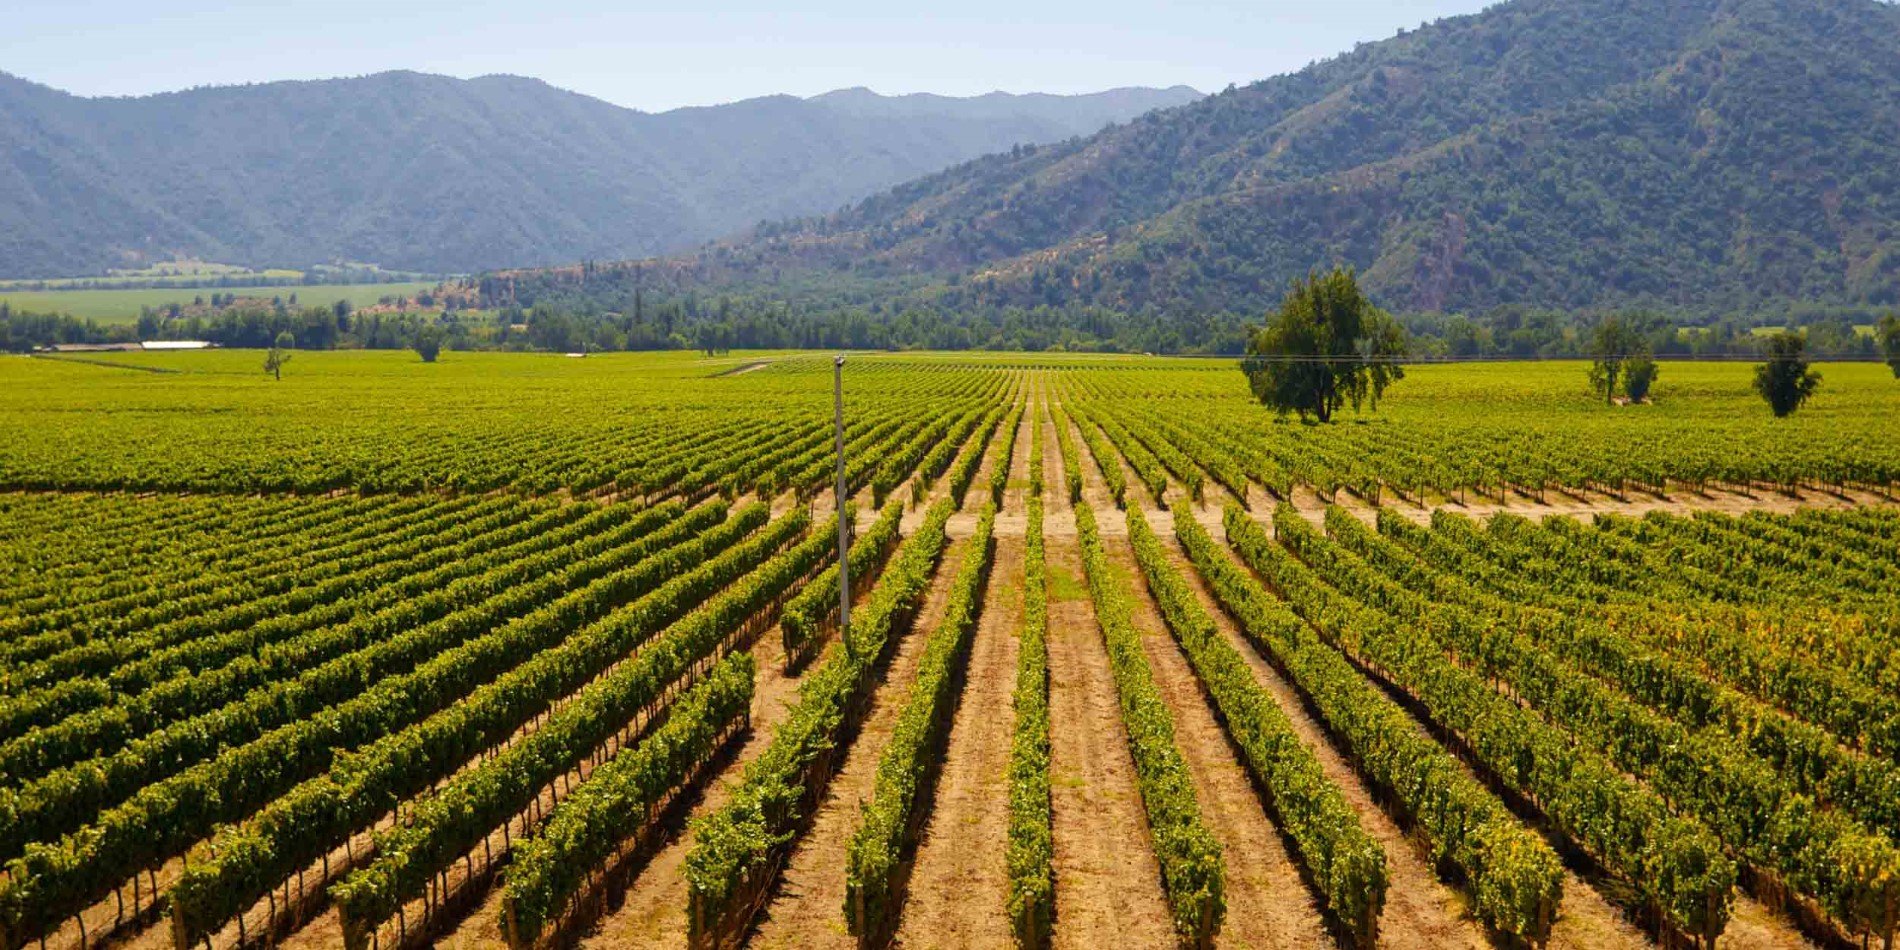 A vineyard outside of Santiago de Chile